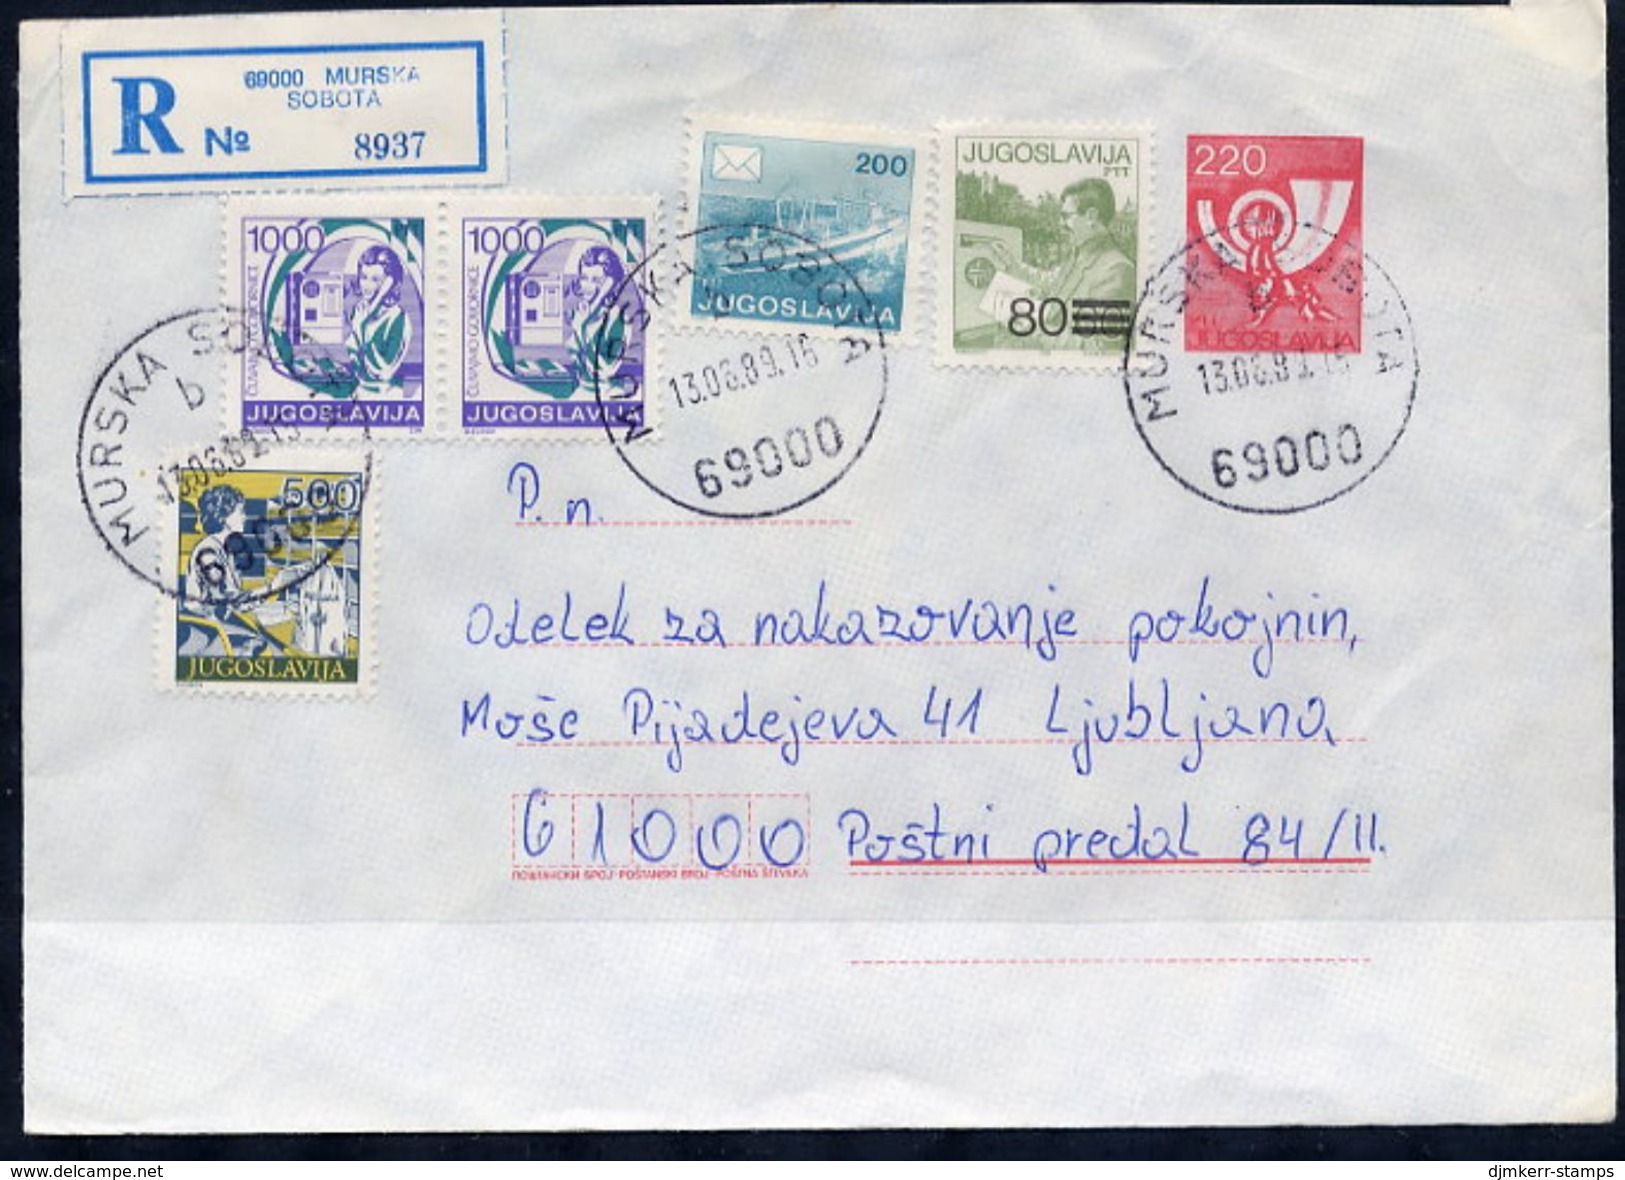 YUGOSLAVIA 1988 Posthorn 220 D. Registered Stationery Envelope Used With Additional Franking.  Michel U83 - Ganzsachen